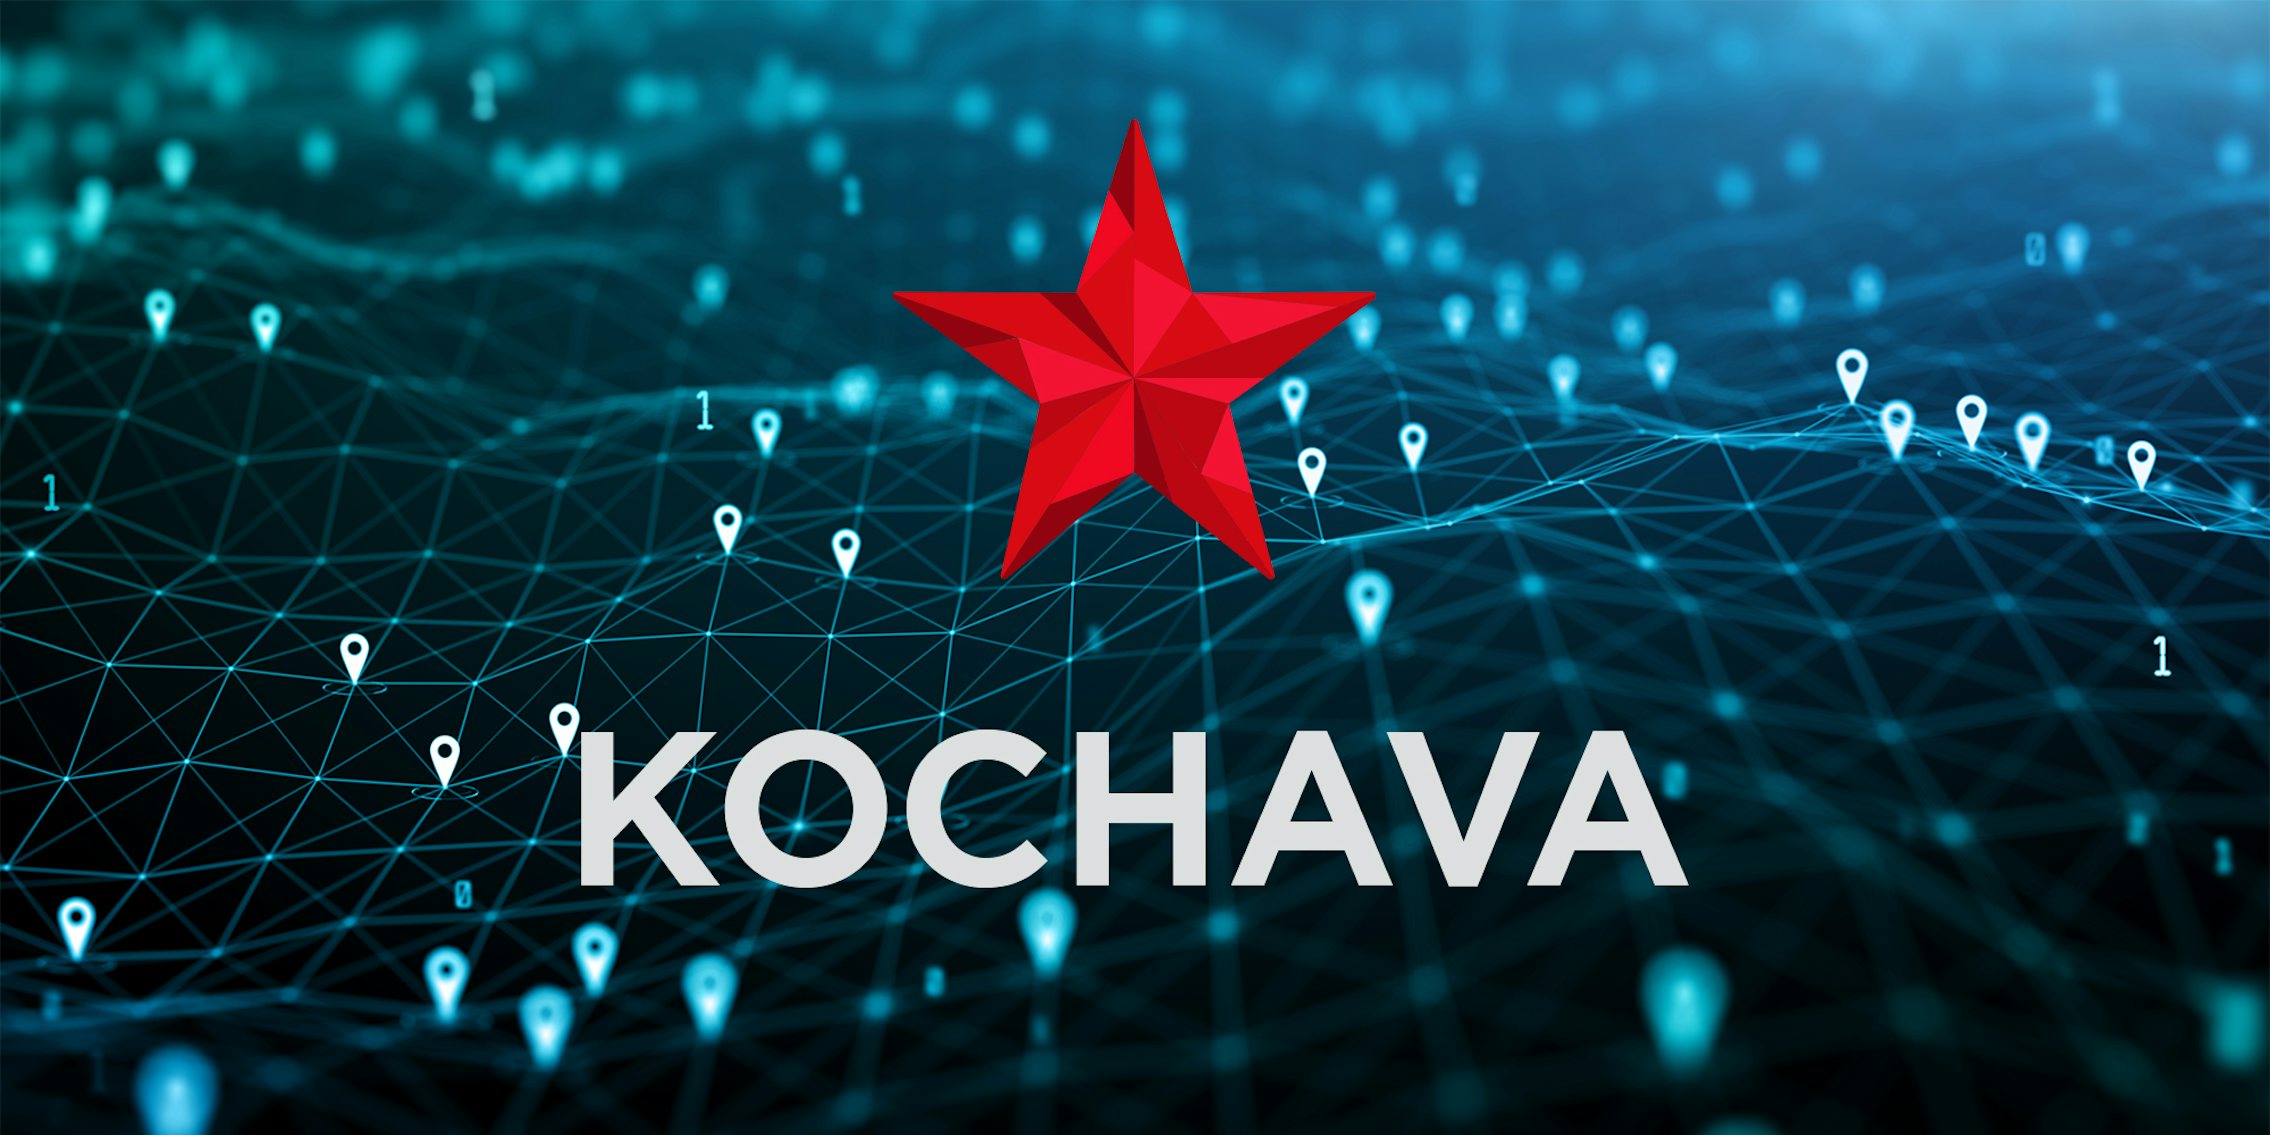 Kochava logo over location data markers